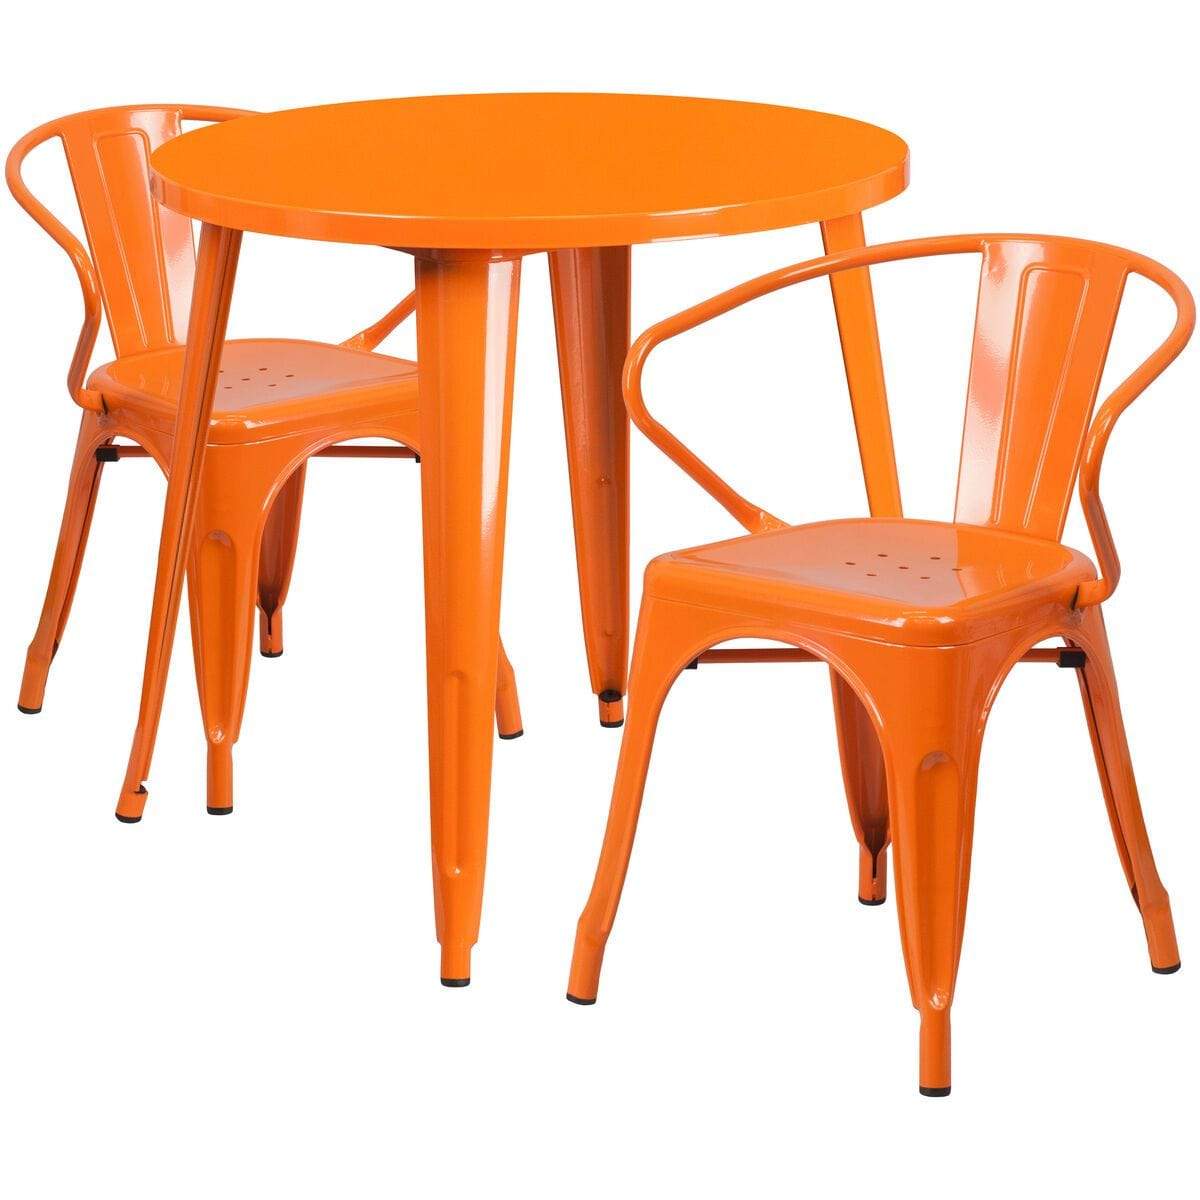 Samuel Norman & Assoc. Furnishings Metal Colorful Table and Chair Sets Samuel Norman & Assoc. Furnishings 30RD Orange Metal Set